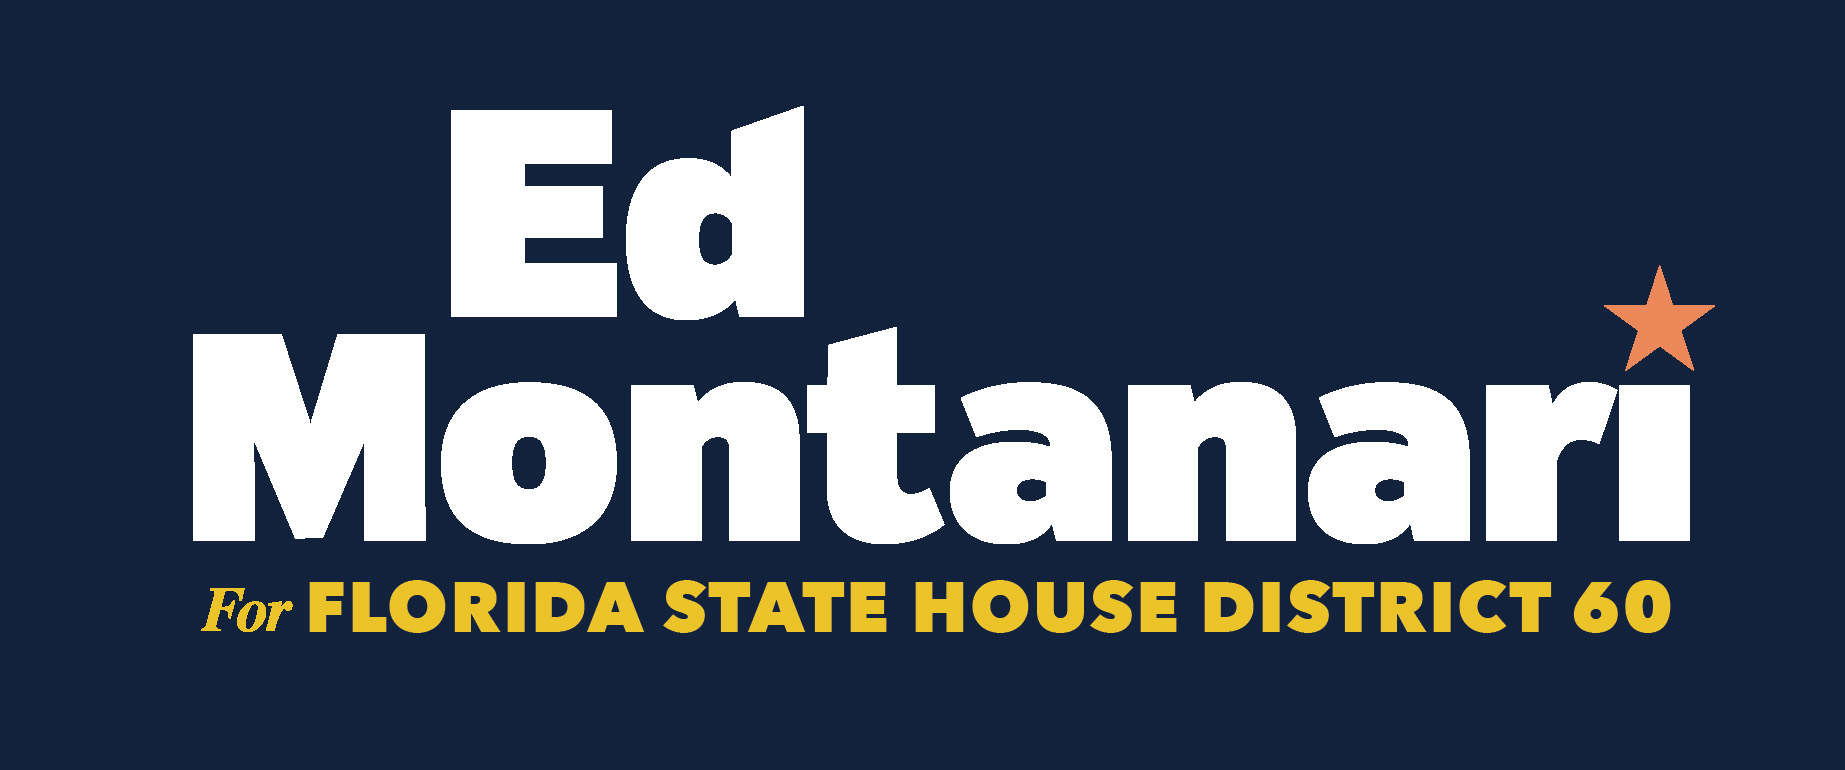 Ed Montanari For Florida State House